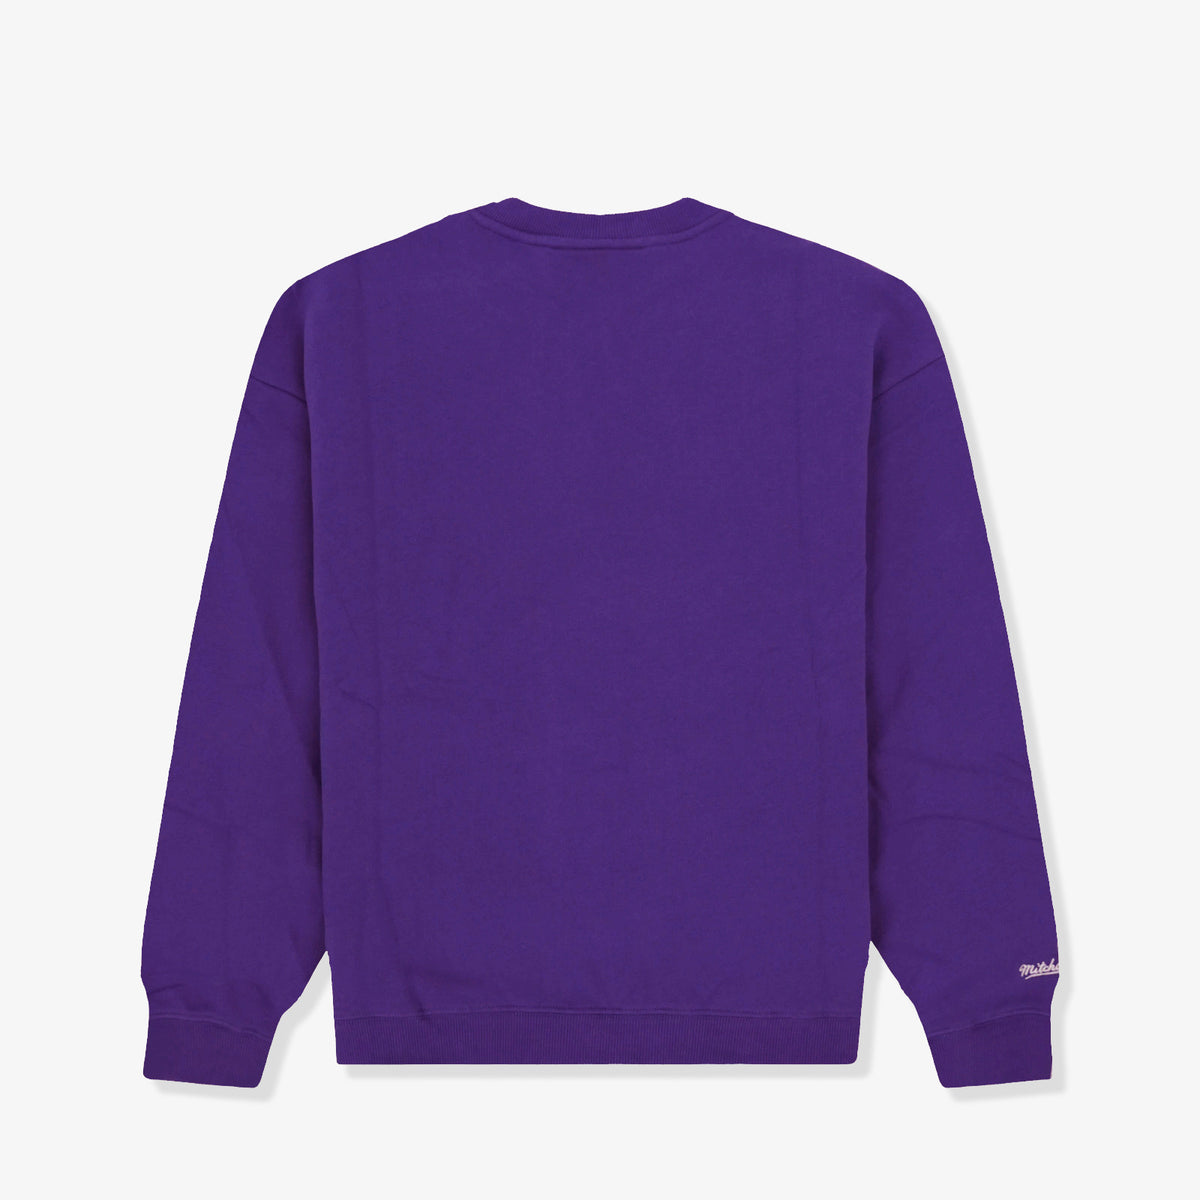 Phoenix Suns Shooting Crew Sweatshirt - Purple